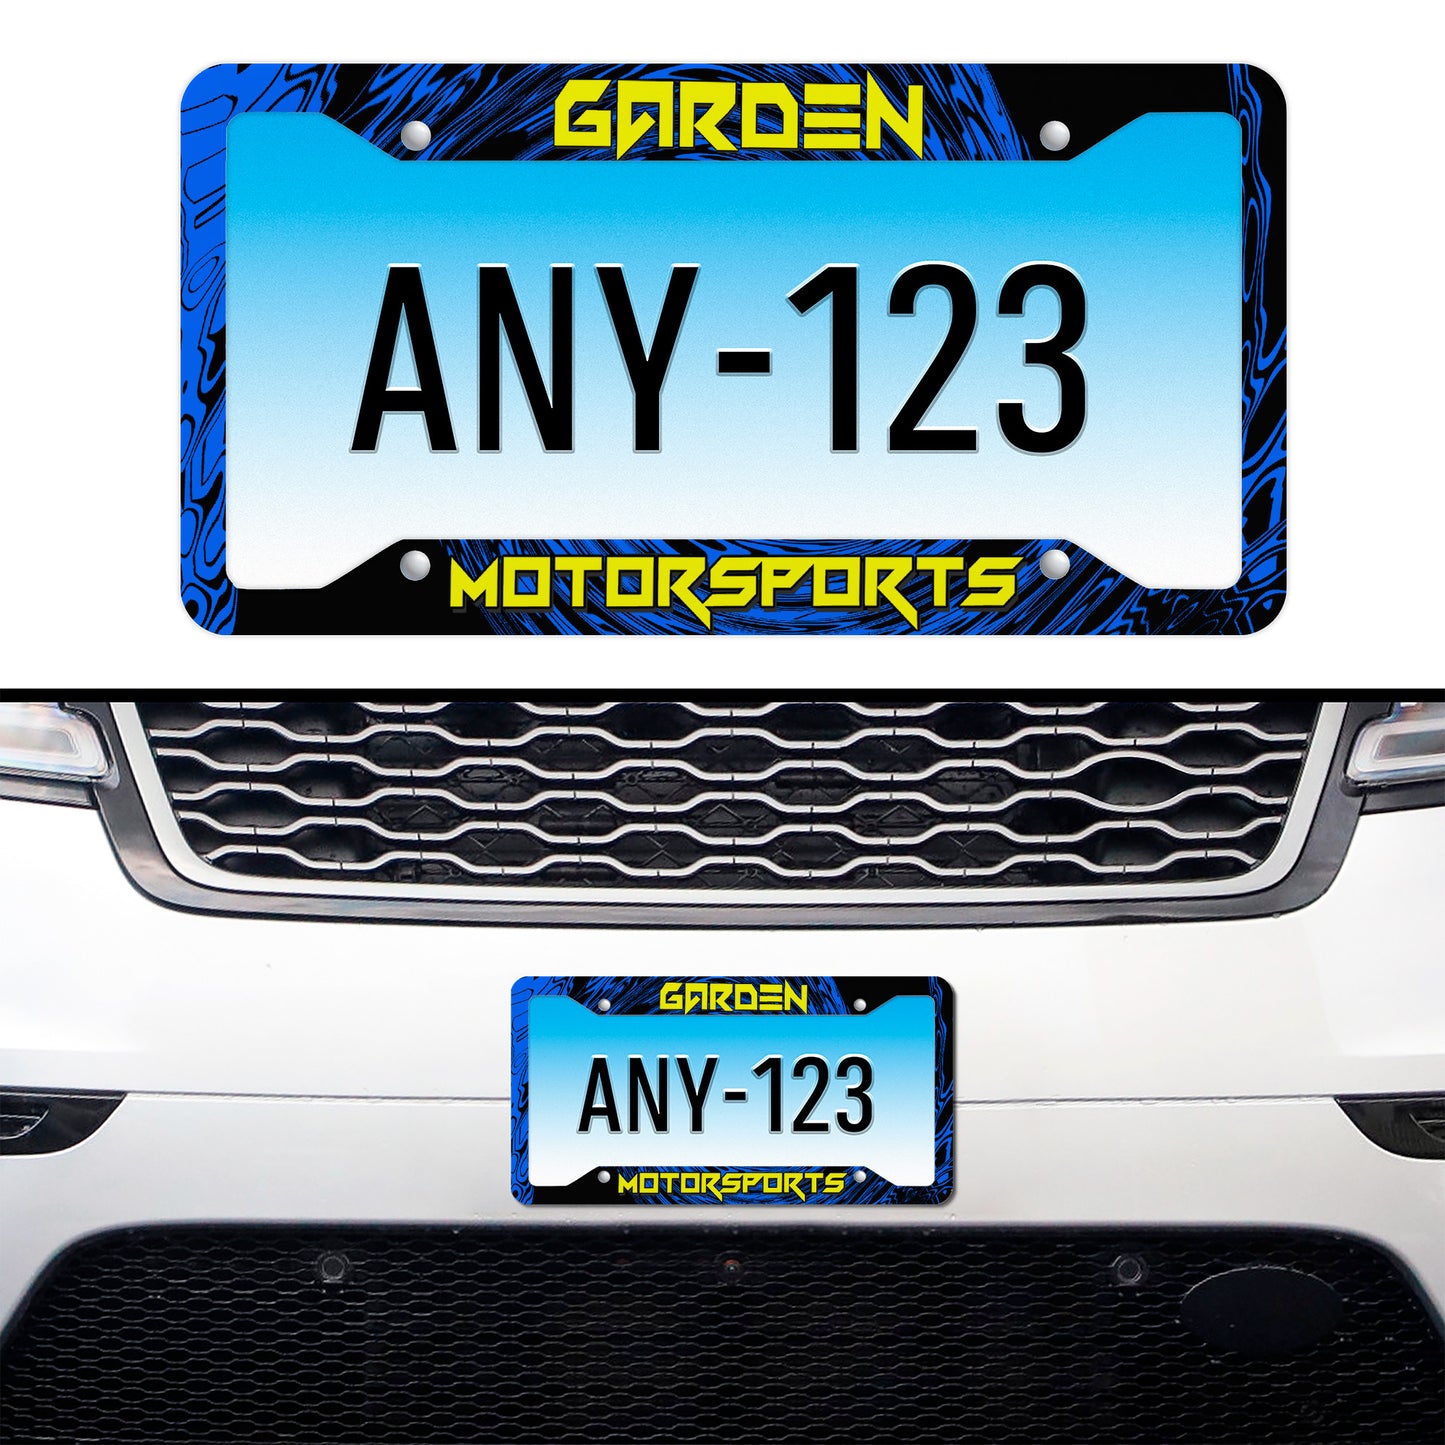 Garden Motorsports License Plate Frames